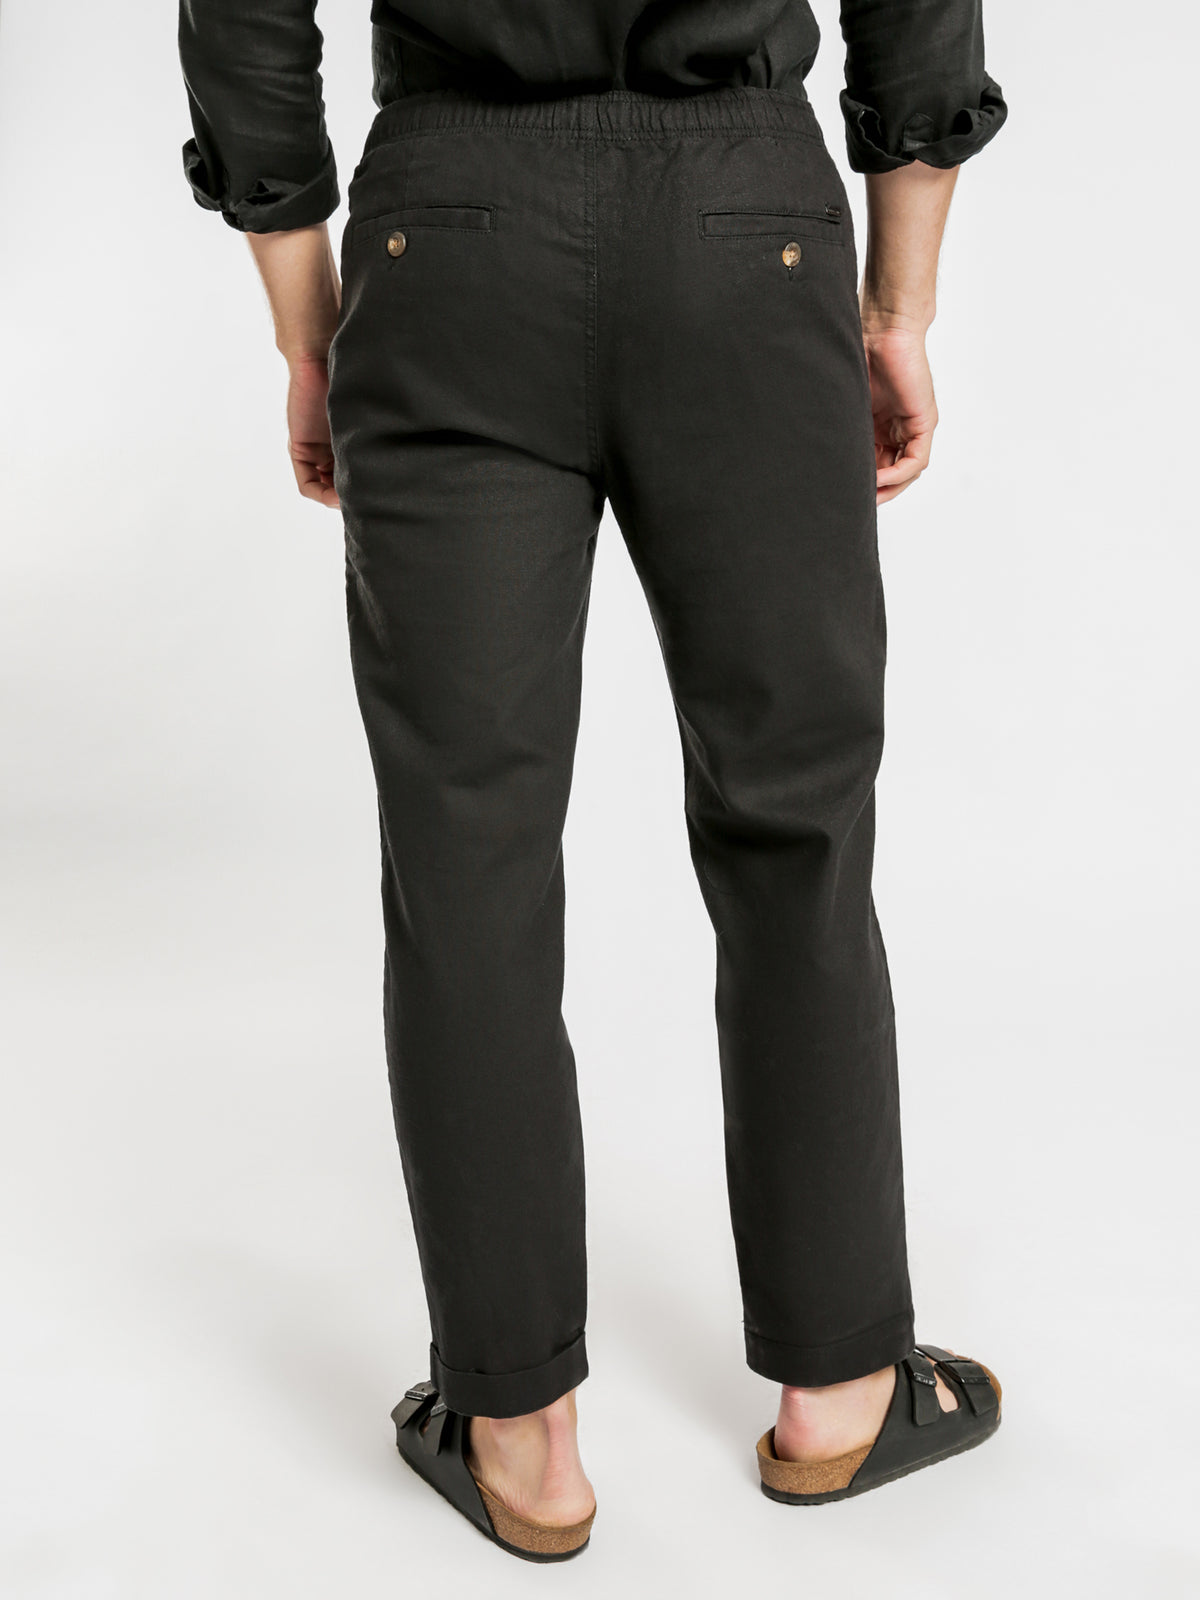 Nelson Linen Pants in Black